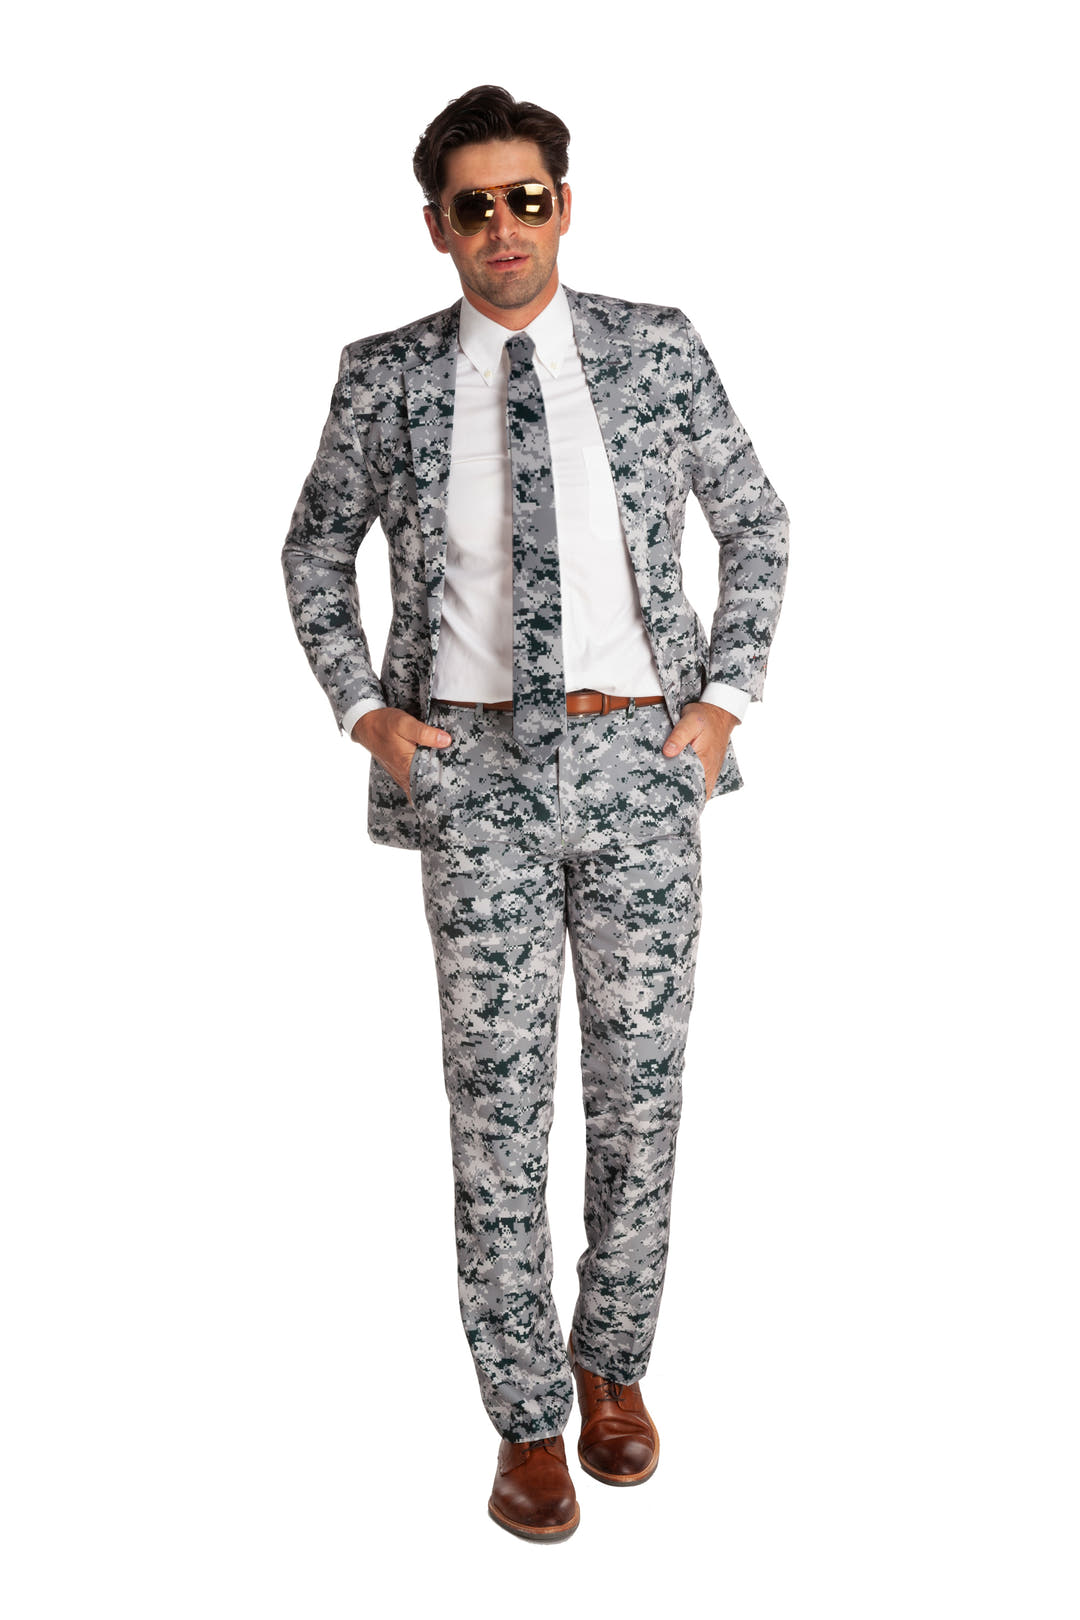 Men's Digital Camo Suit | The Urban Evader